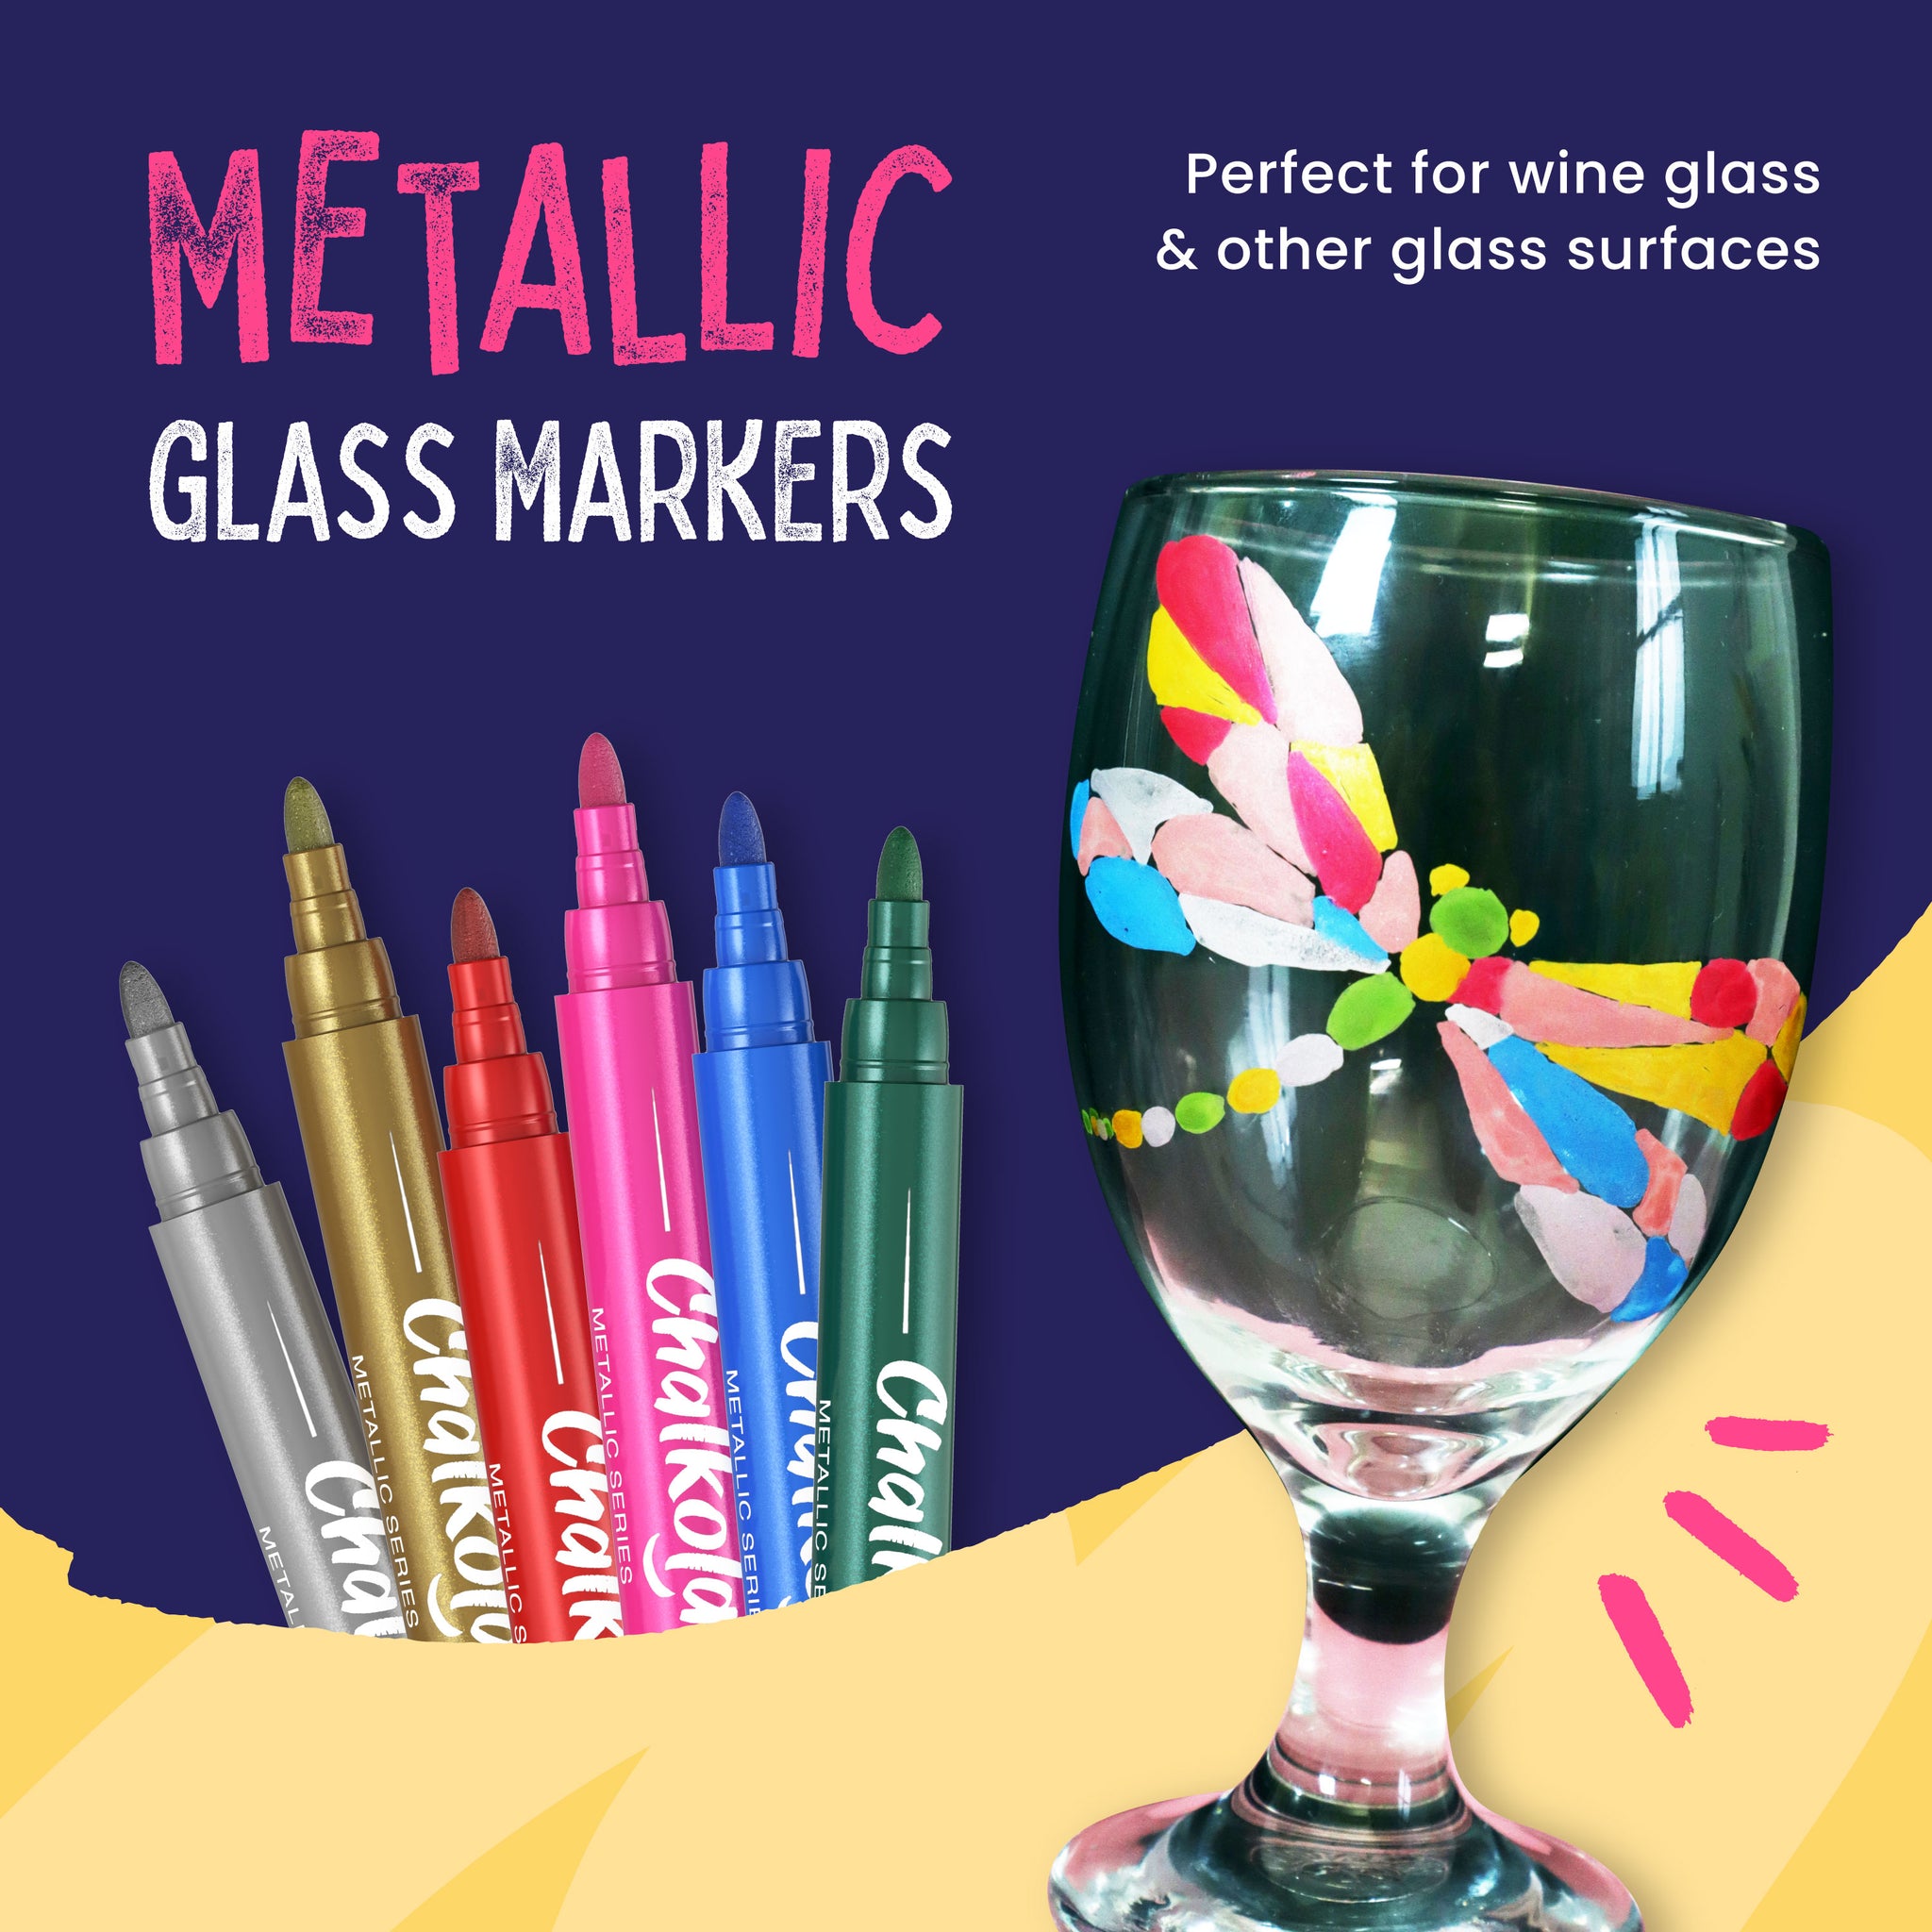 Bundle: Window Chalk Markers 15mm Nib - Neon & Classic Colors